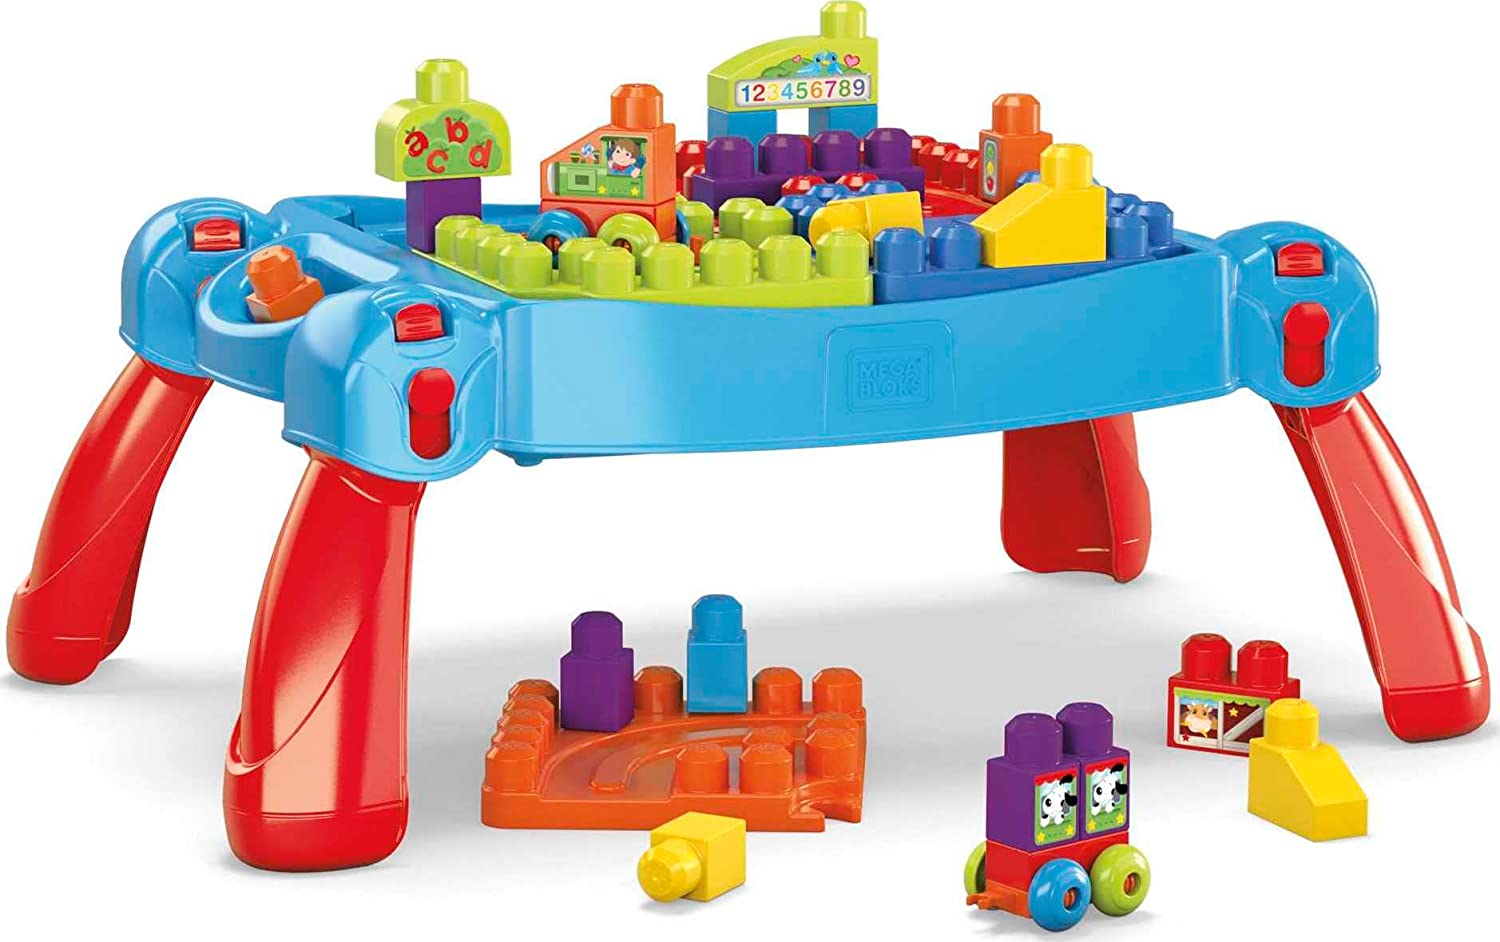 Mega Bloks Build ‘n Learn Table Toys For 1-Year-Old Boy